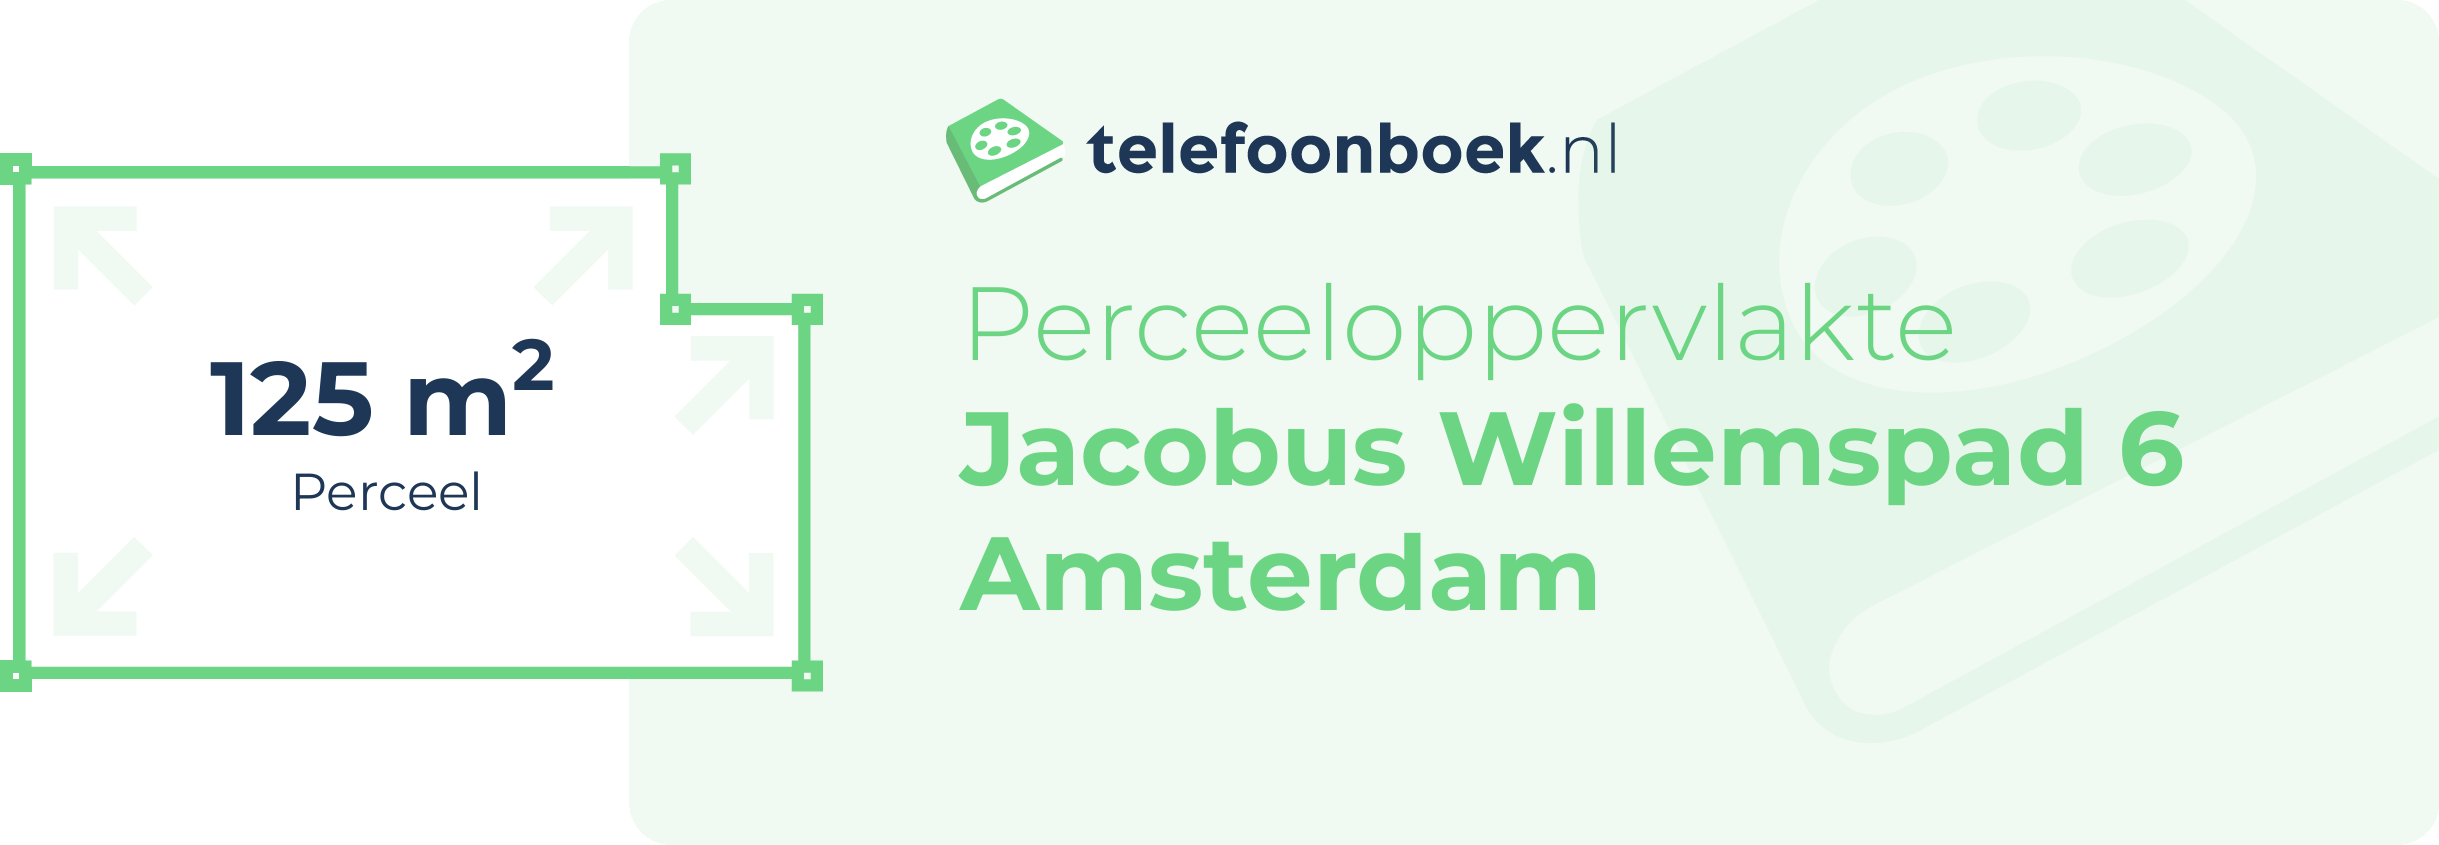 Perceeloppervlakte Jacobus Willemspad 6 Amsterdam